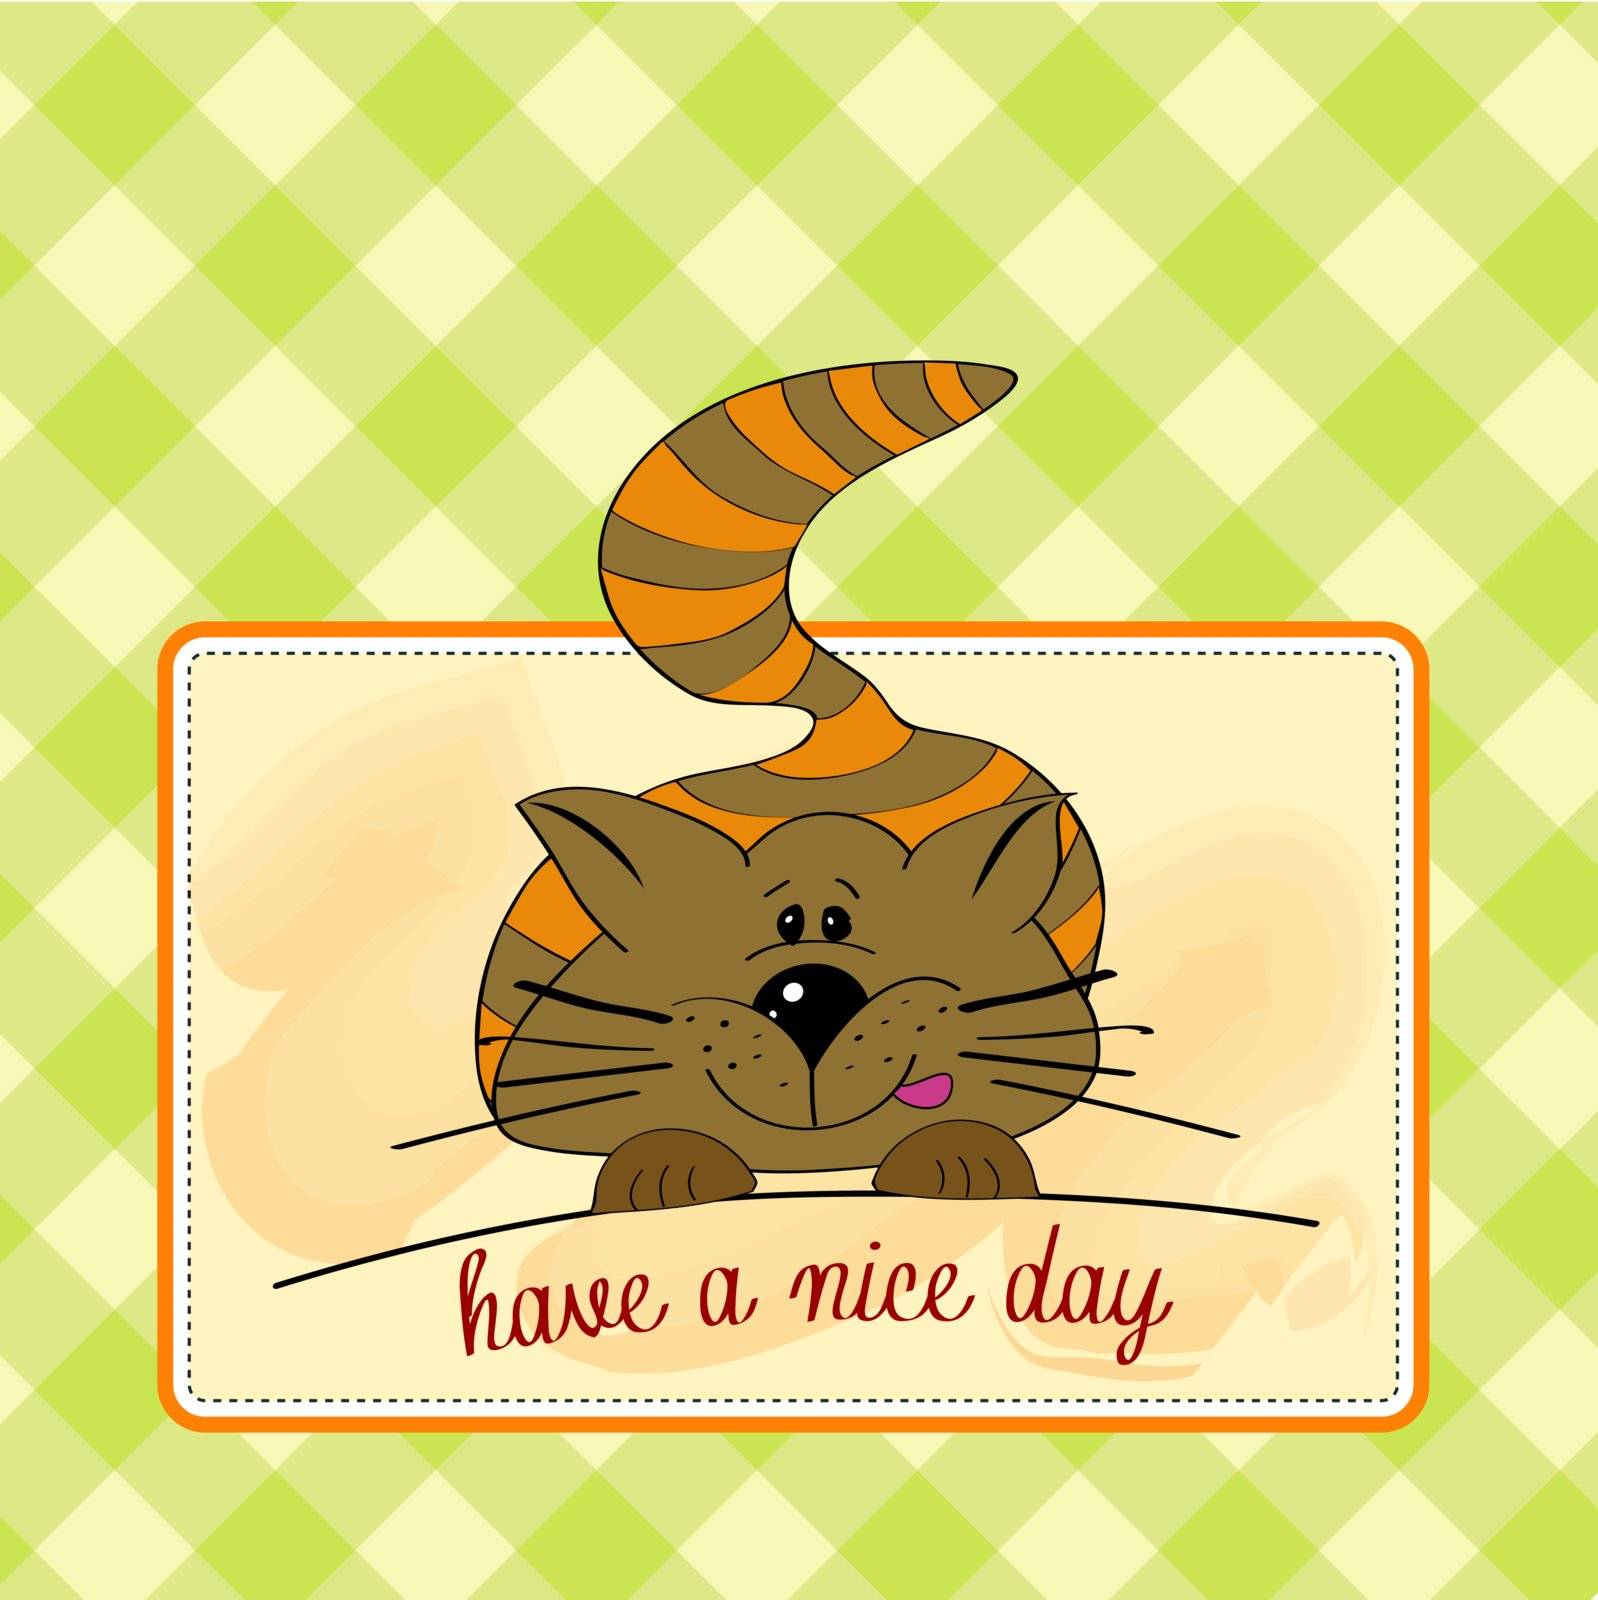 kitty wishes you a nice day by balasoiu